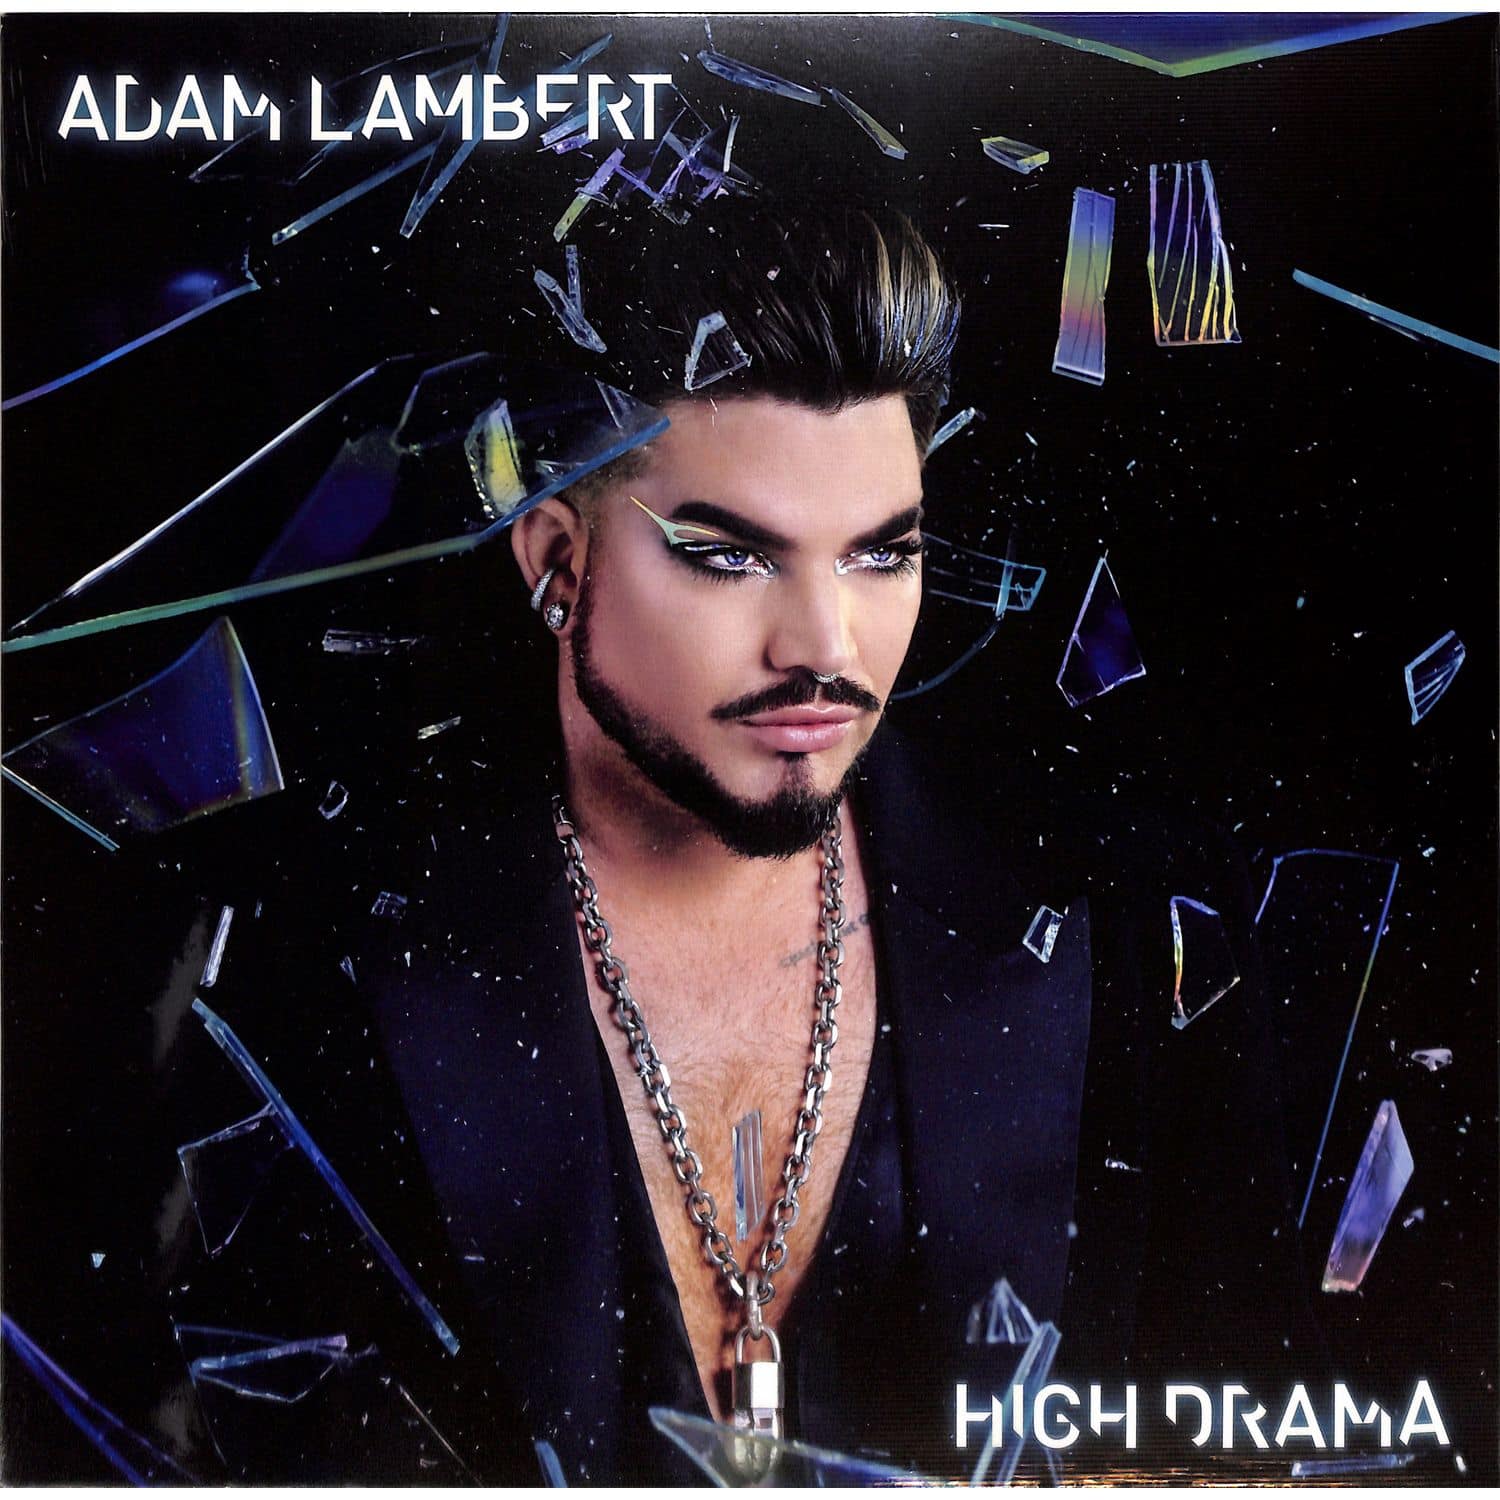 Adam Lambert - HIGH DRAMA 